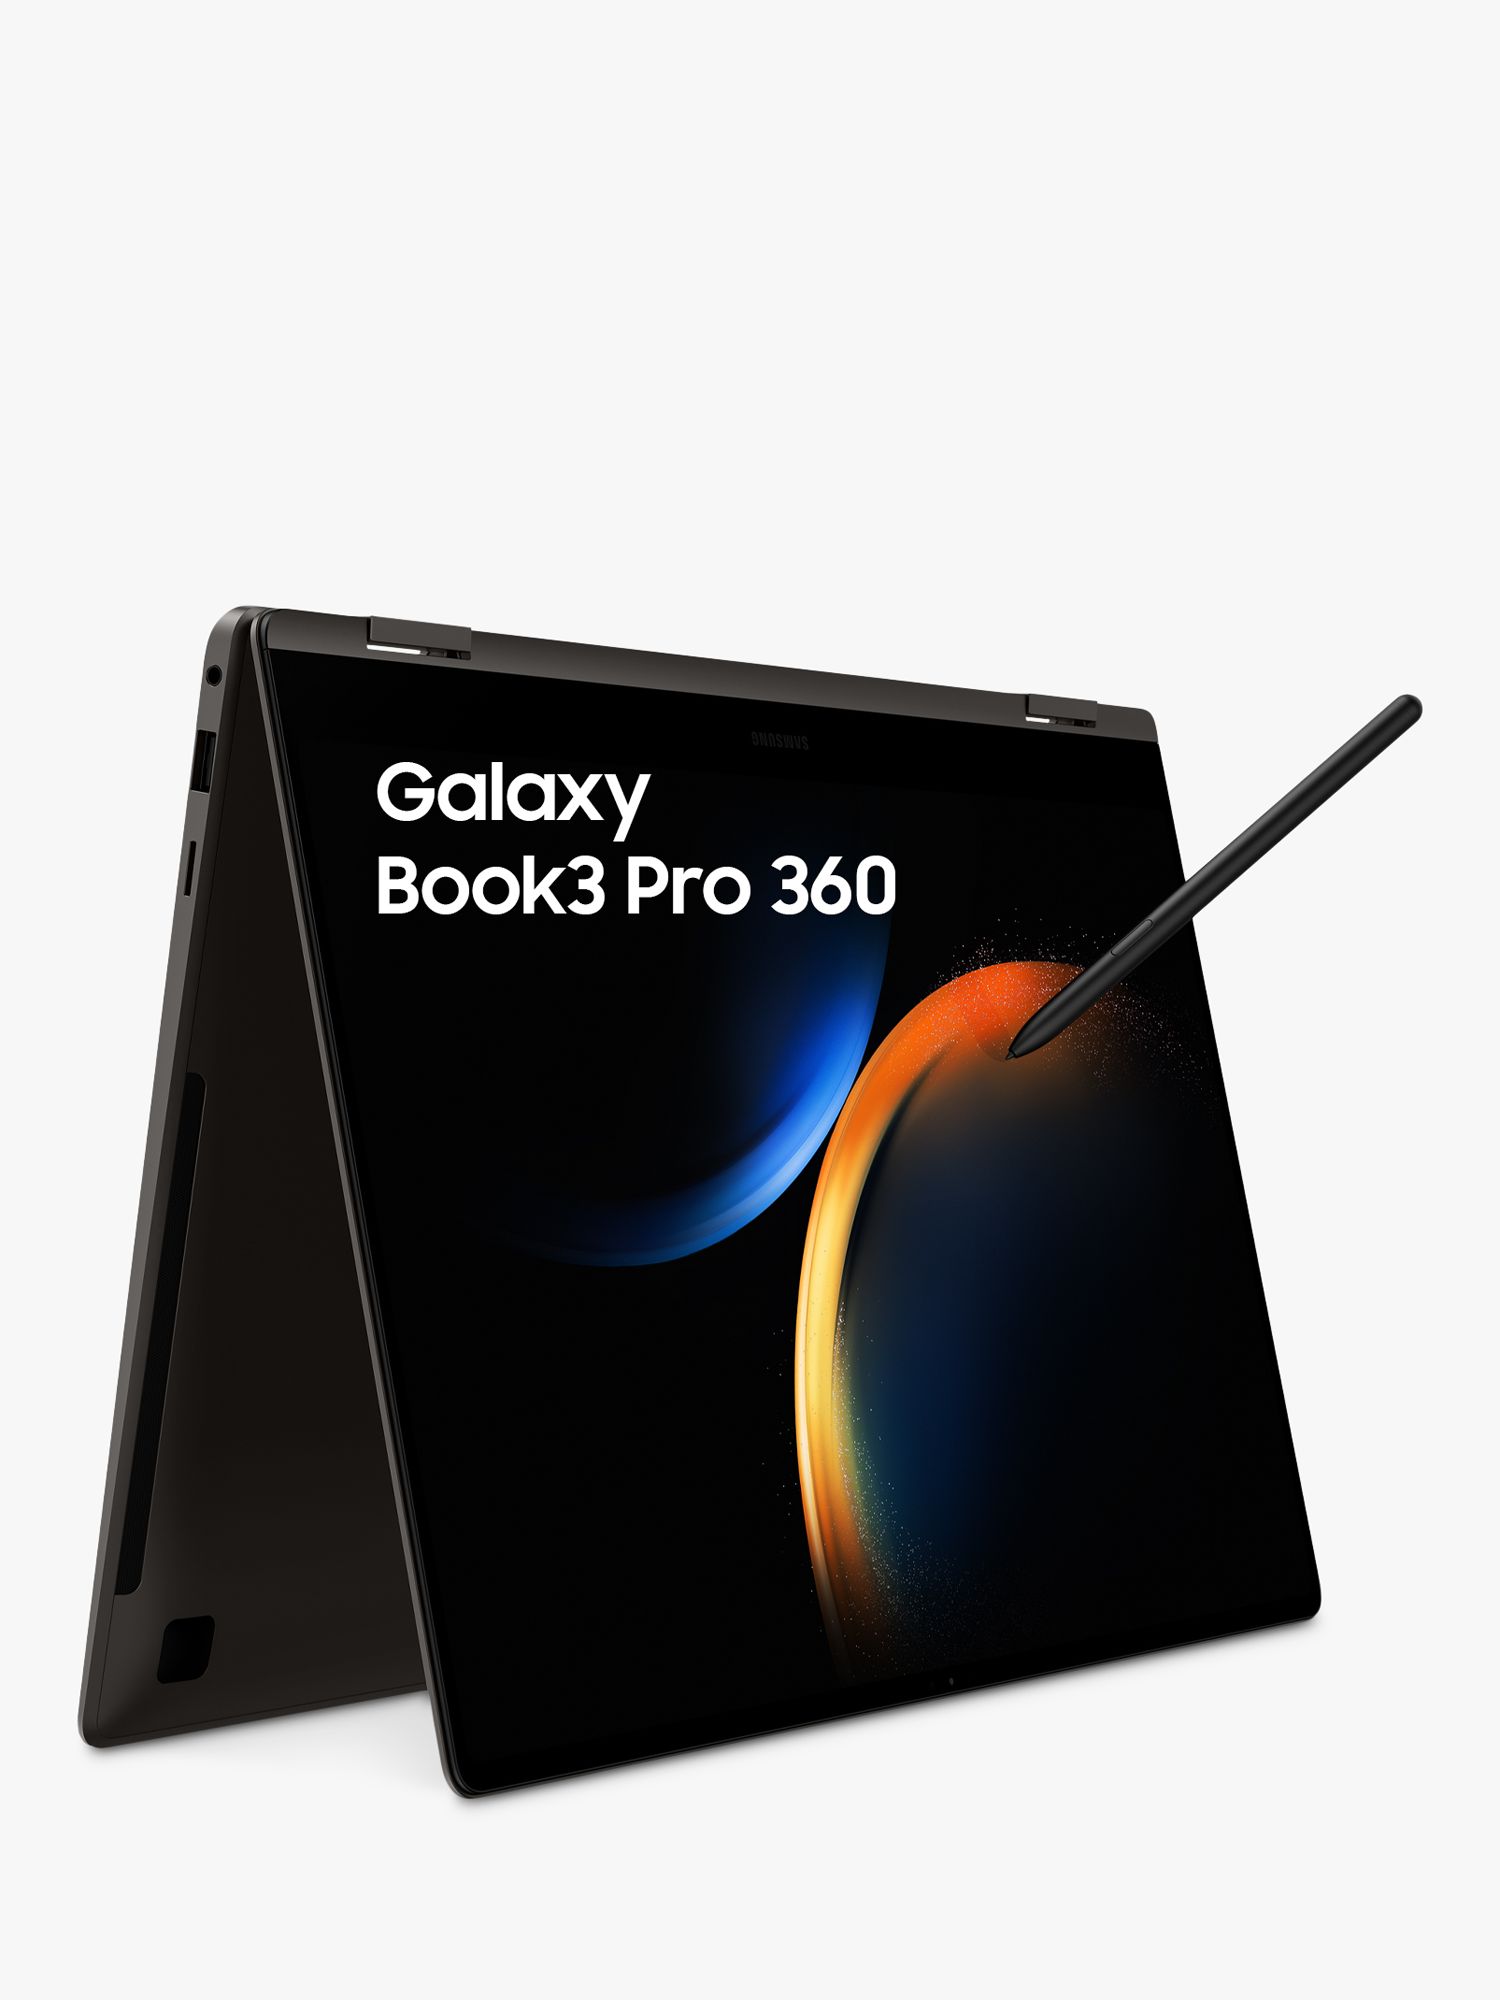 Samsung Galaxy Book3 Pro 360 Convertible Laptop, Intel Core i7 Processor,  16GB RAM, 512GB SSD, 16 3K Touch Screen, Graphite